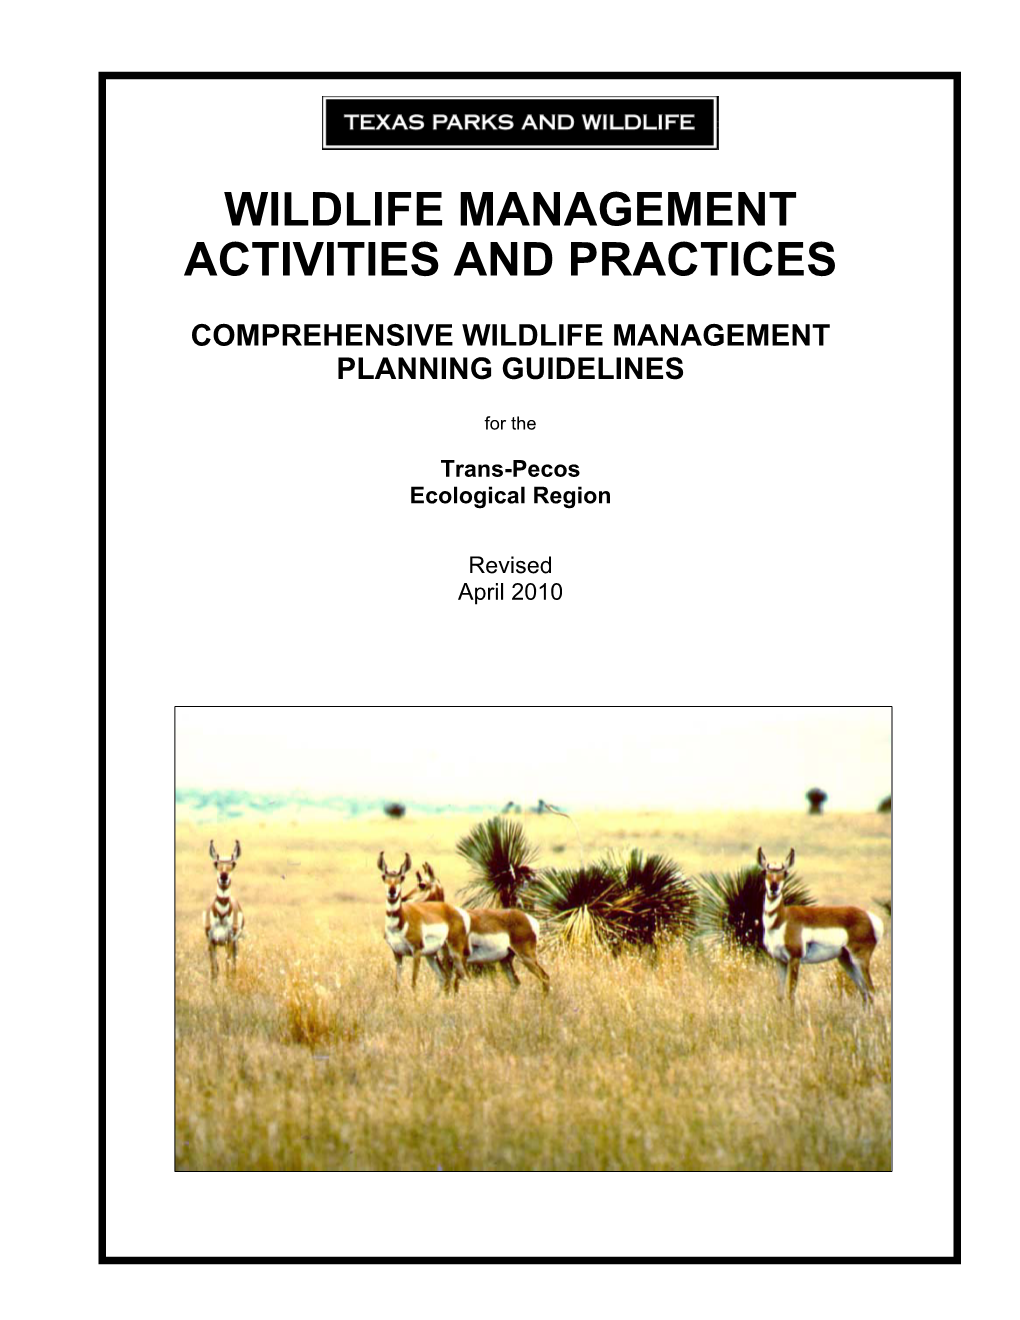 Wildlife Management Activities and Practices